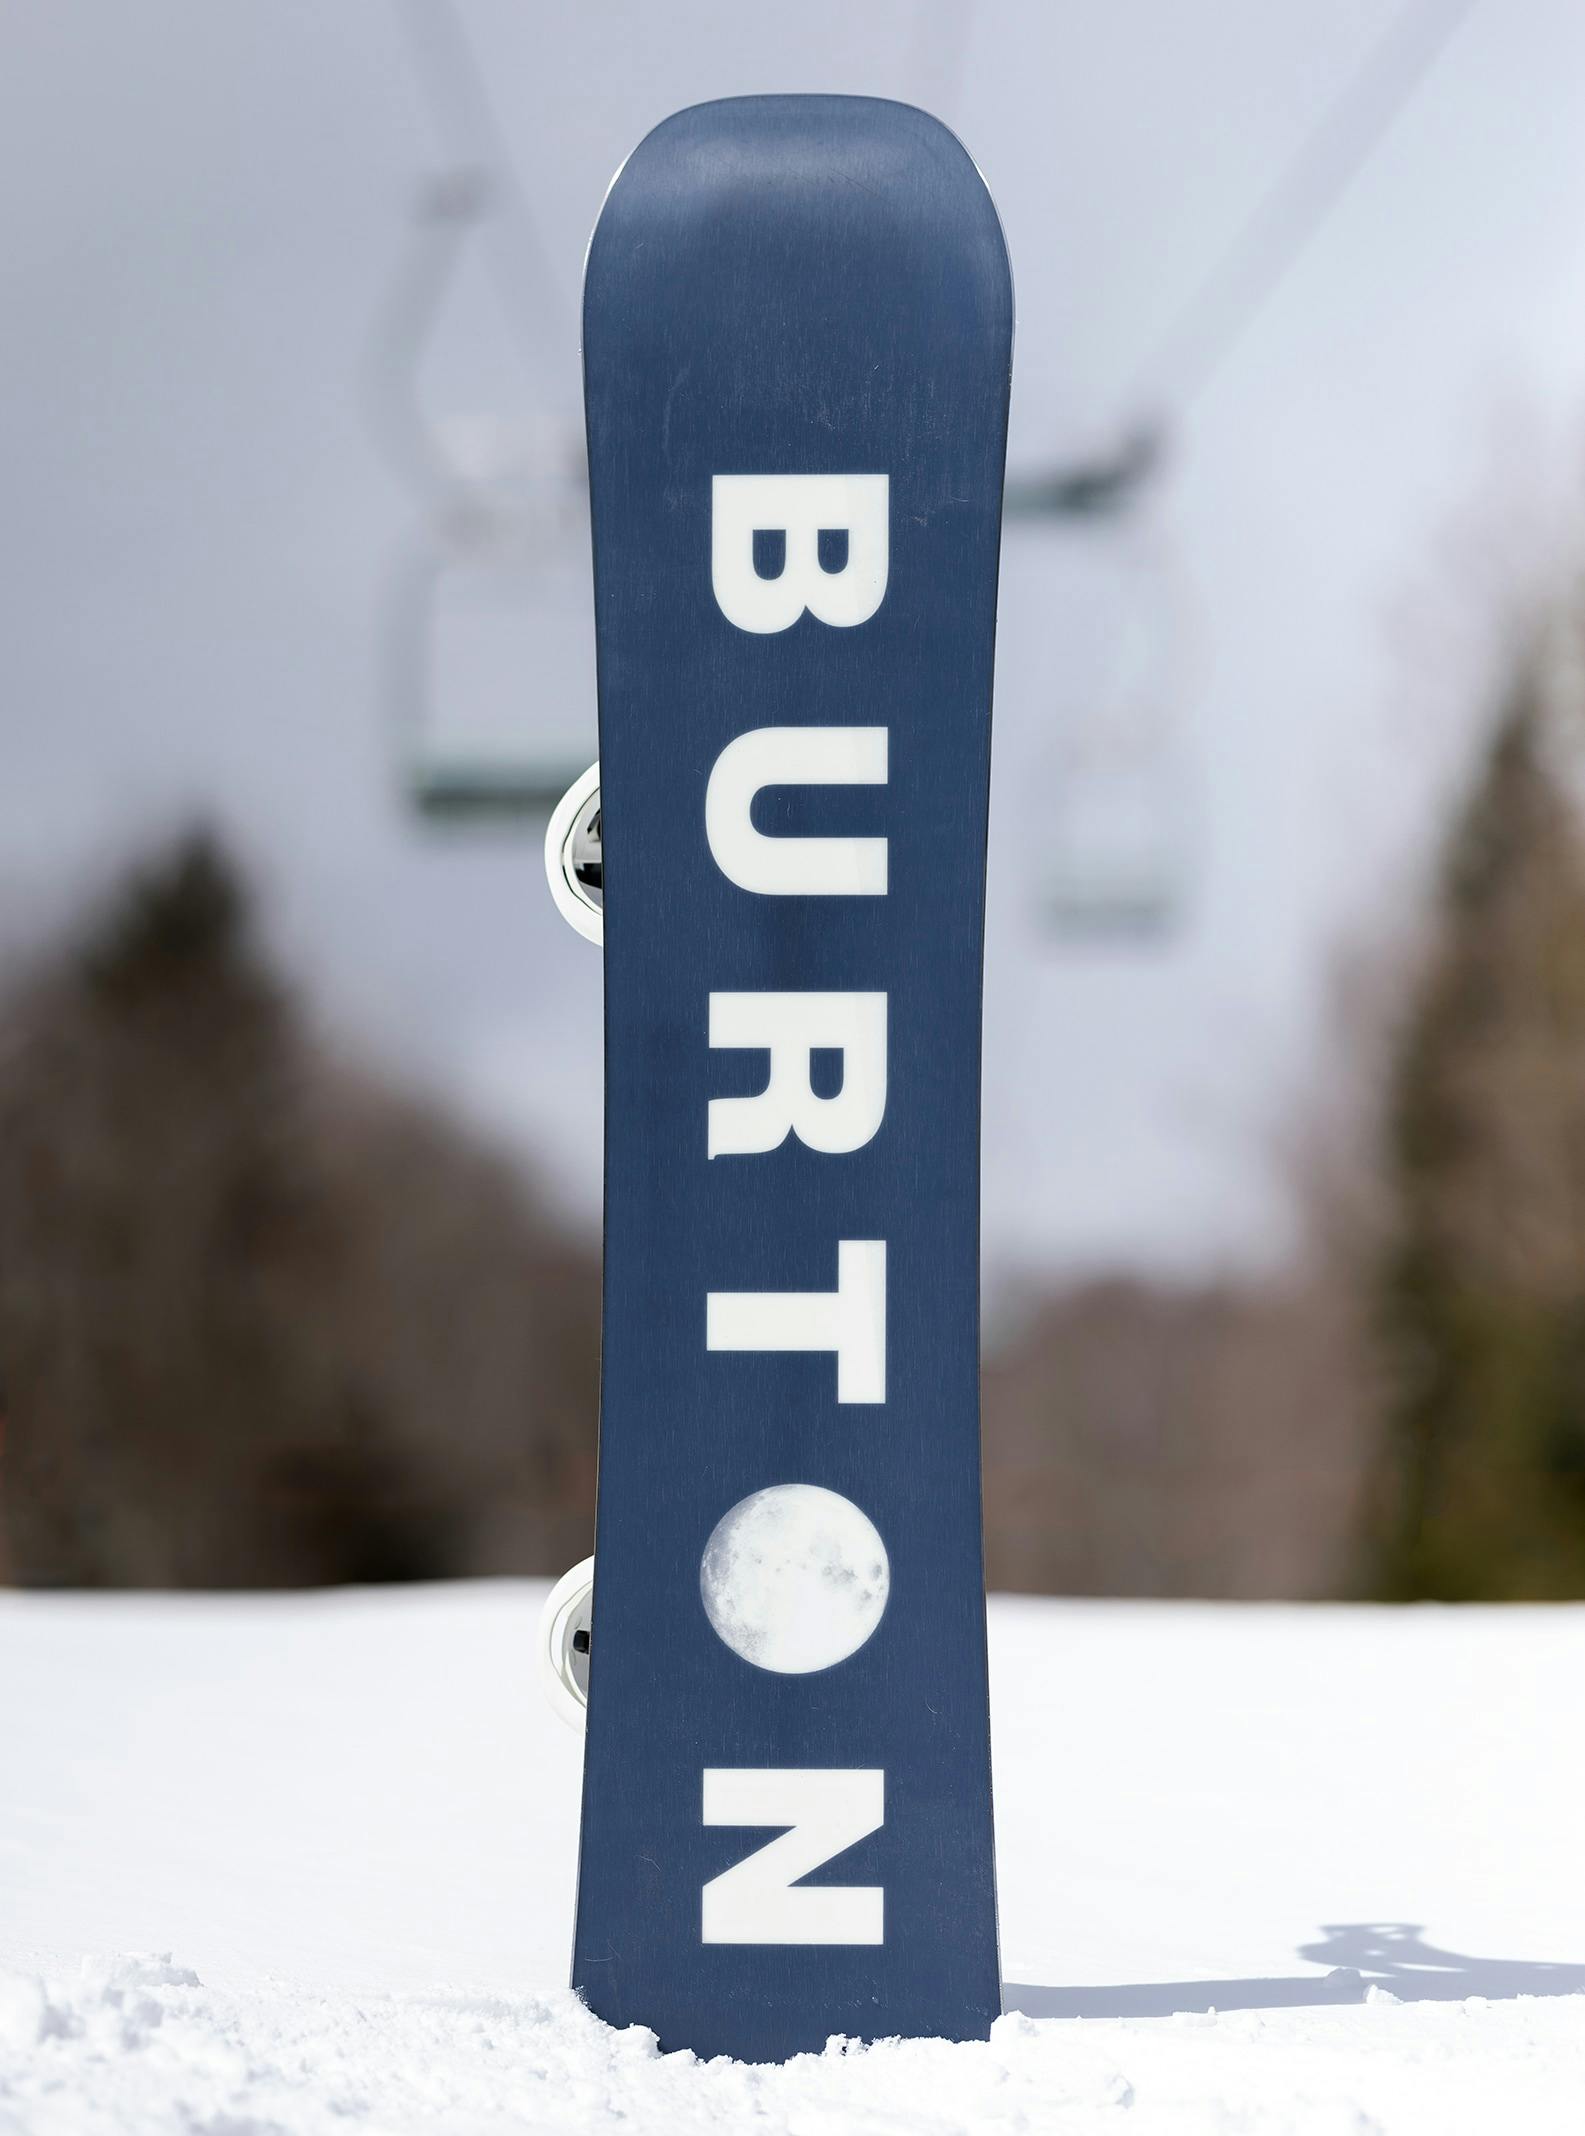 Burton Process Snowboard · 2024 · 162W cm